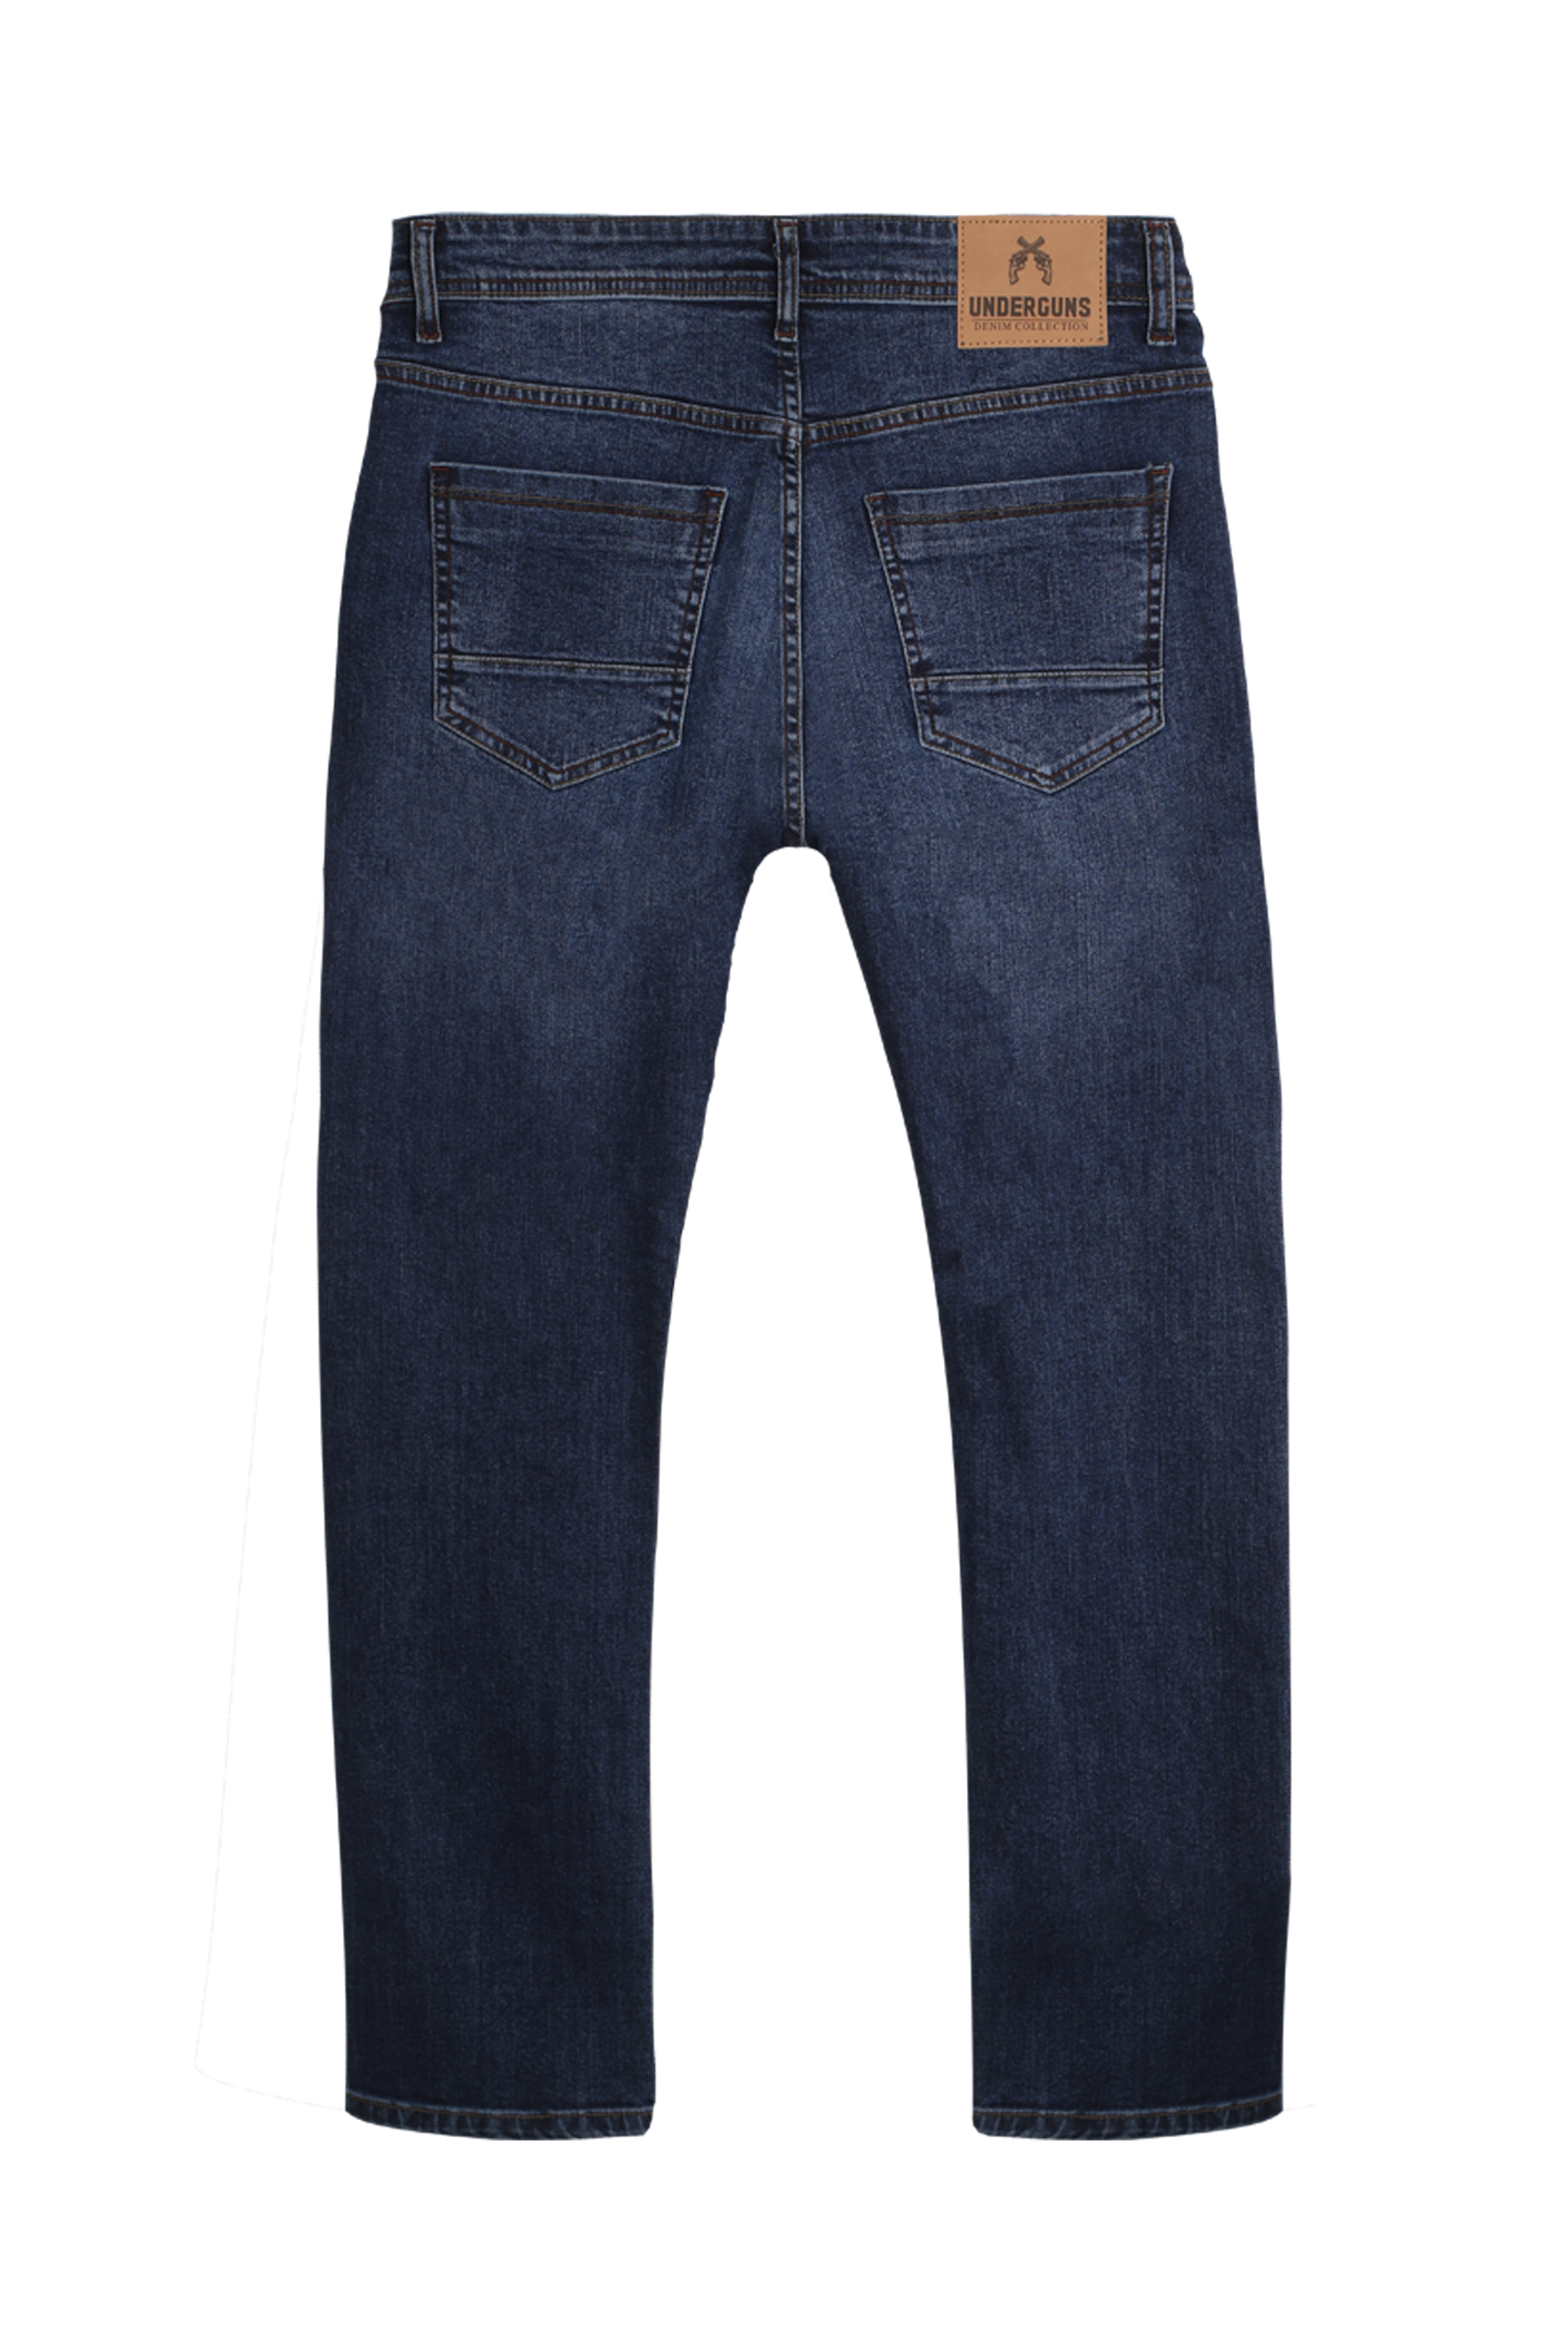 6 Shades Denim Hittlar Dnm Club Men Jeans at Rs 540/piece in Bengaluru |  ID: 23870348662